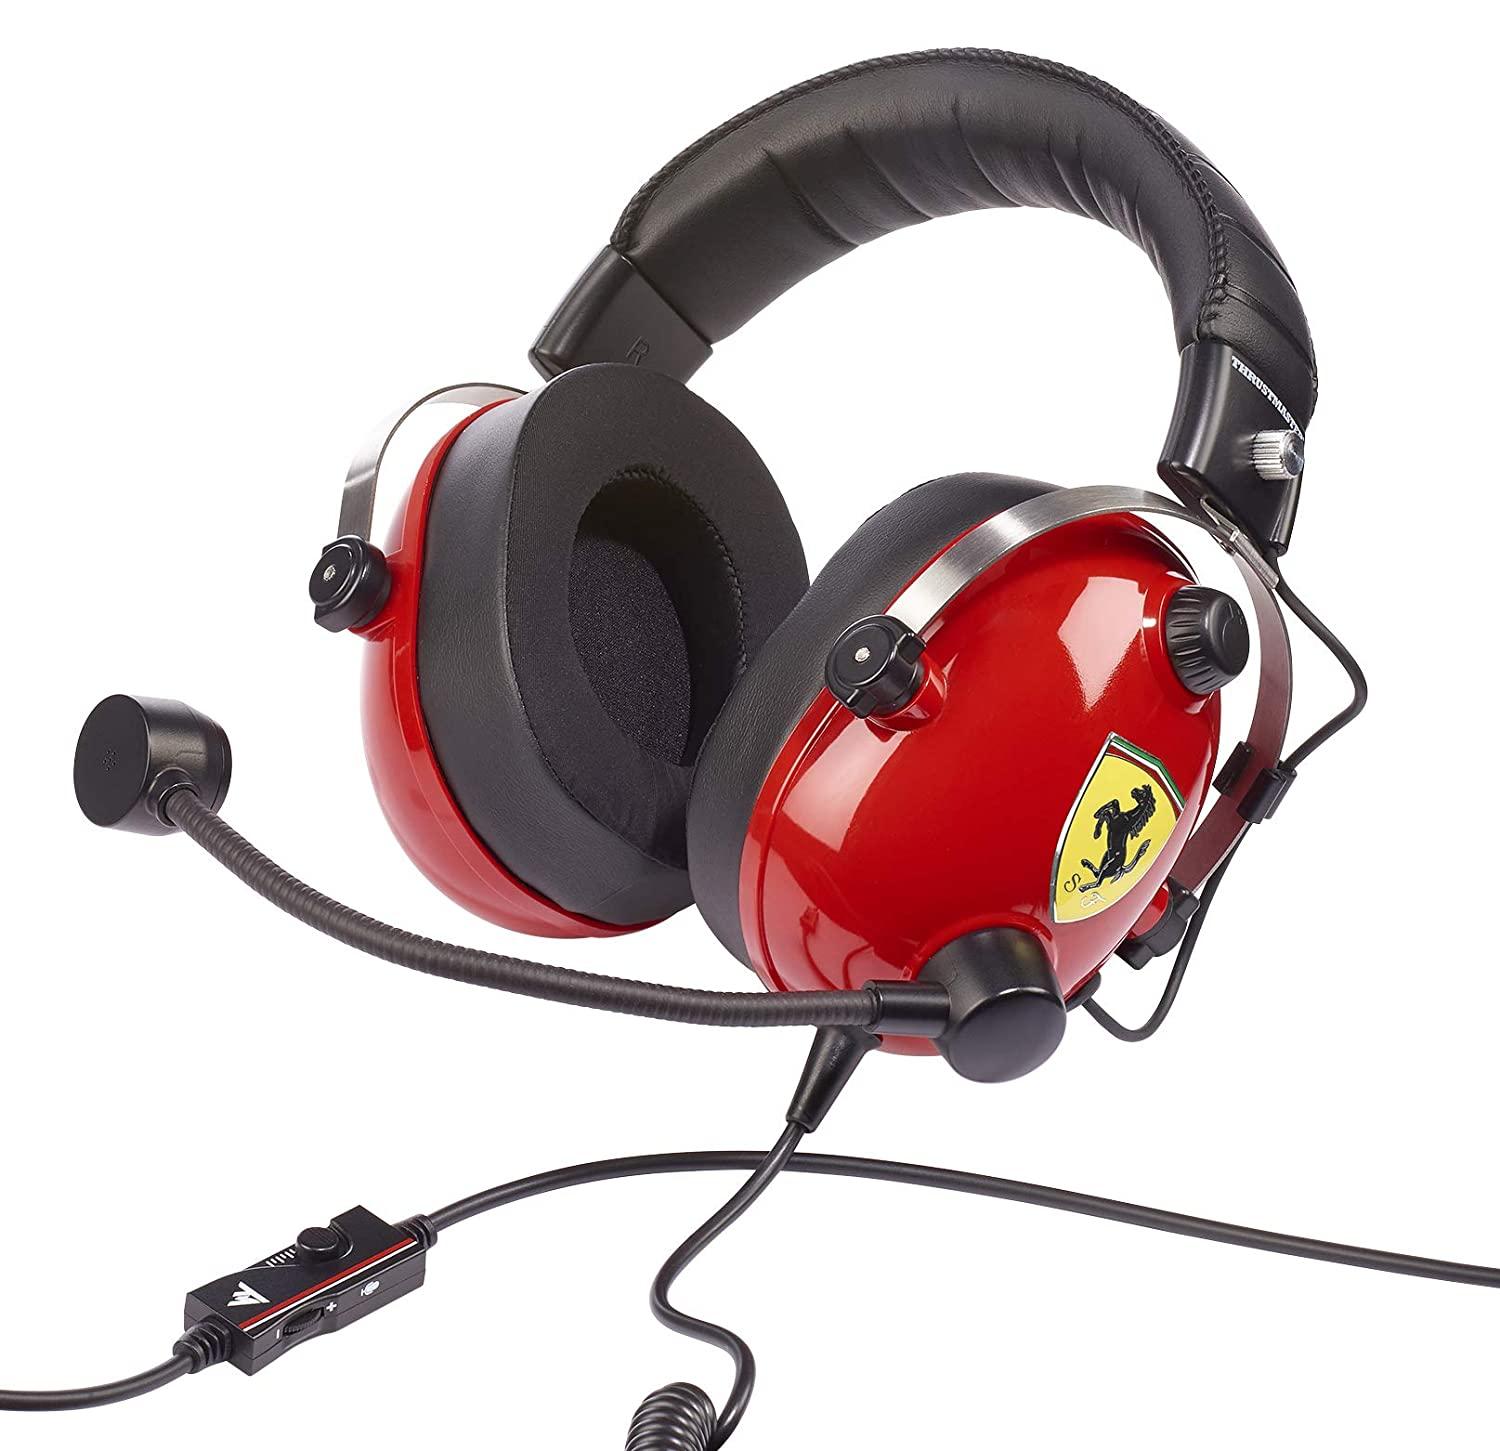 T.Racing Scuderia Ferrari Edition gaming headphones by Thrustmaster